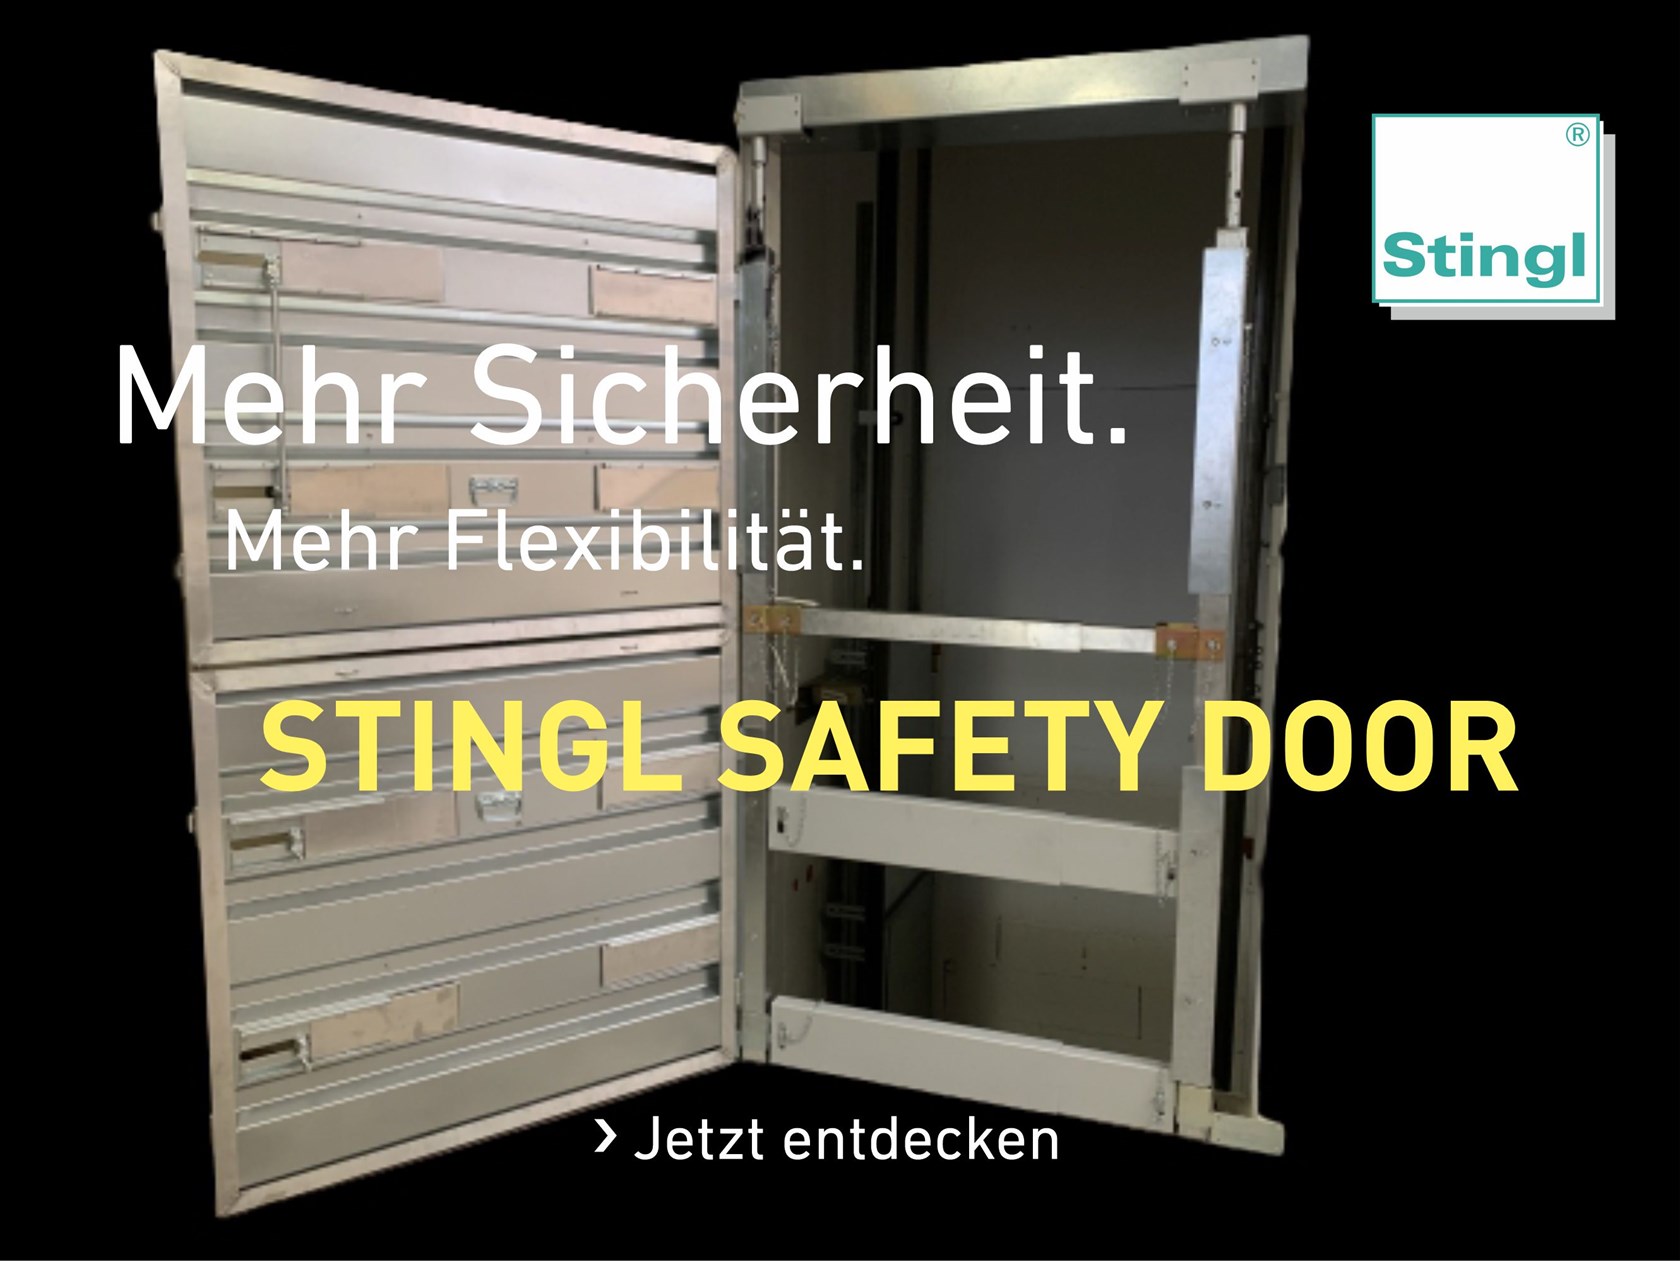 Stingl safety door